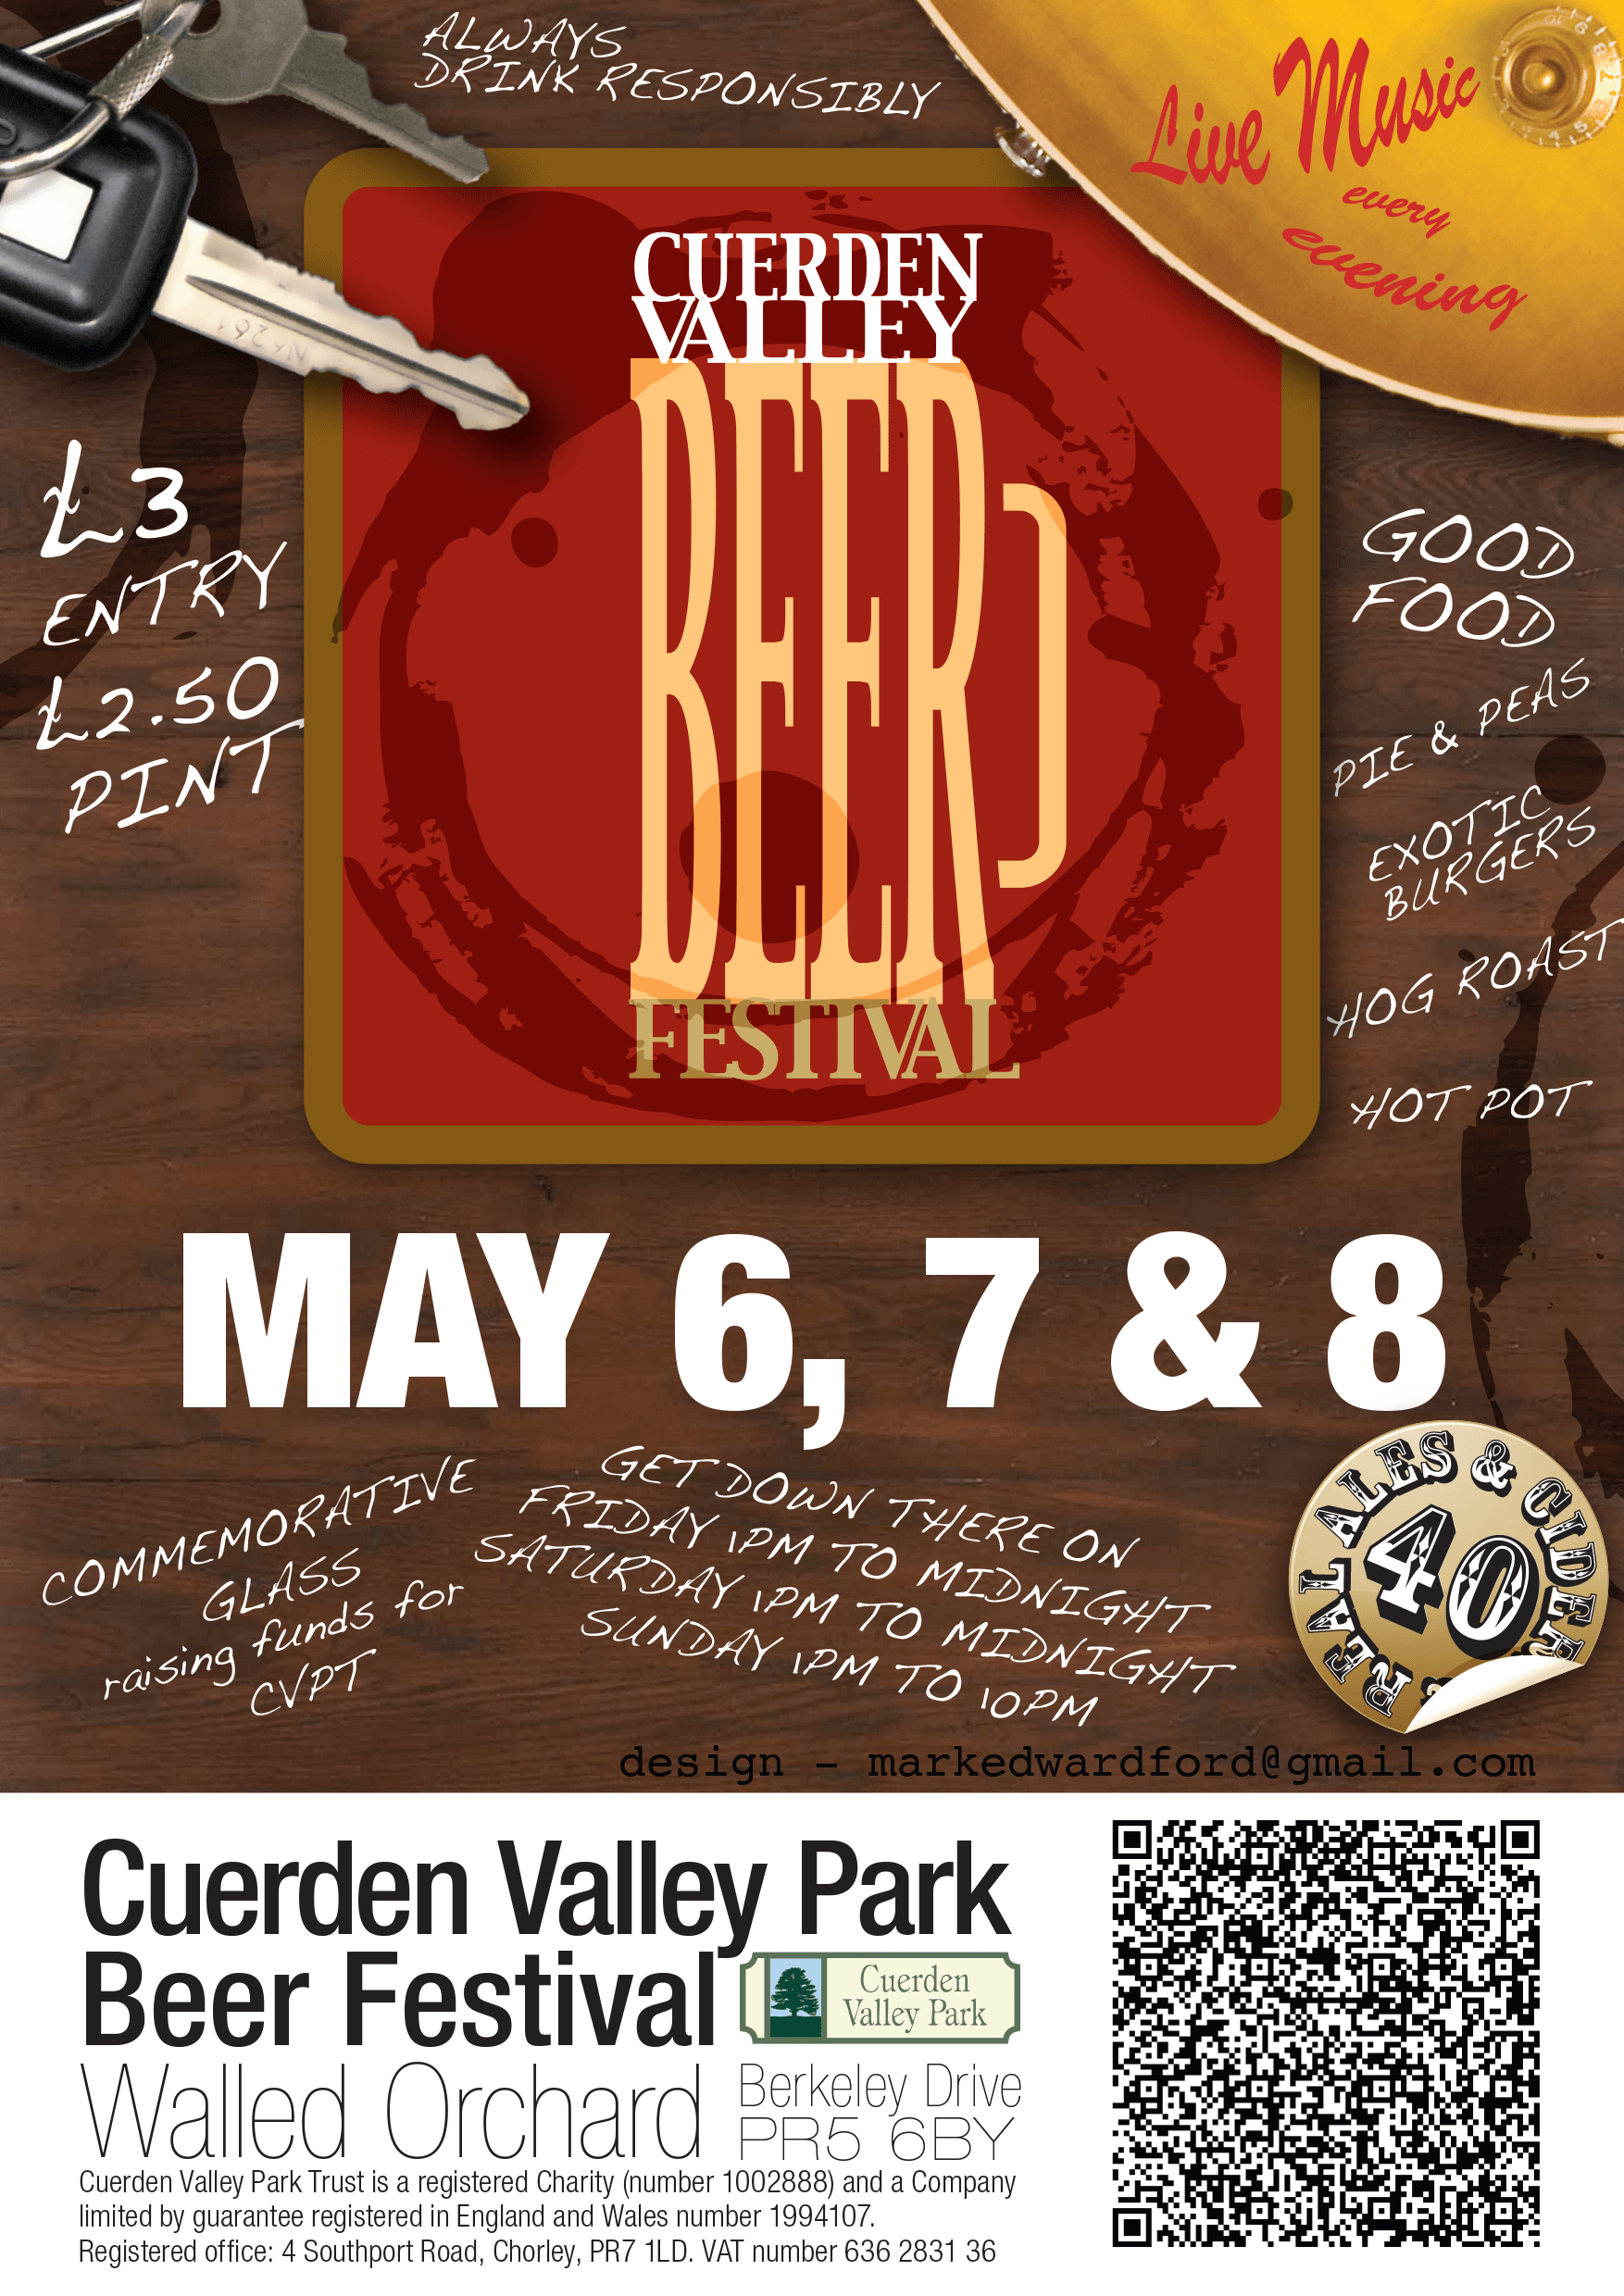 Cuerden Valley Park Beer Festival 2010 Poster